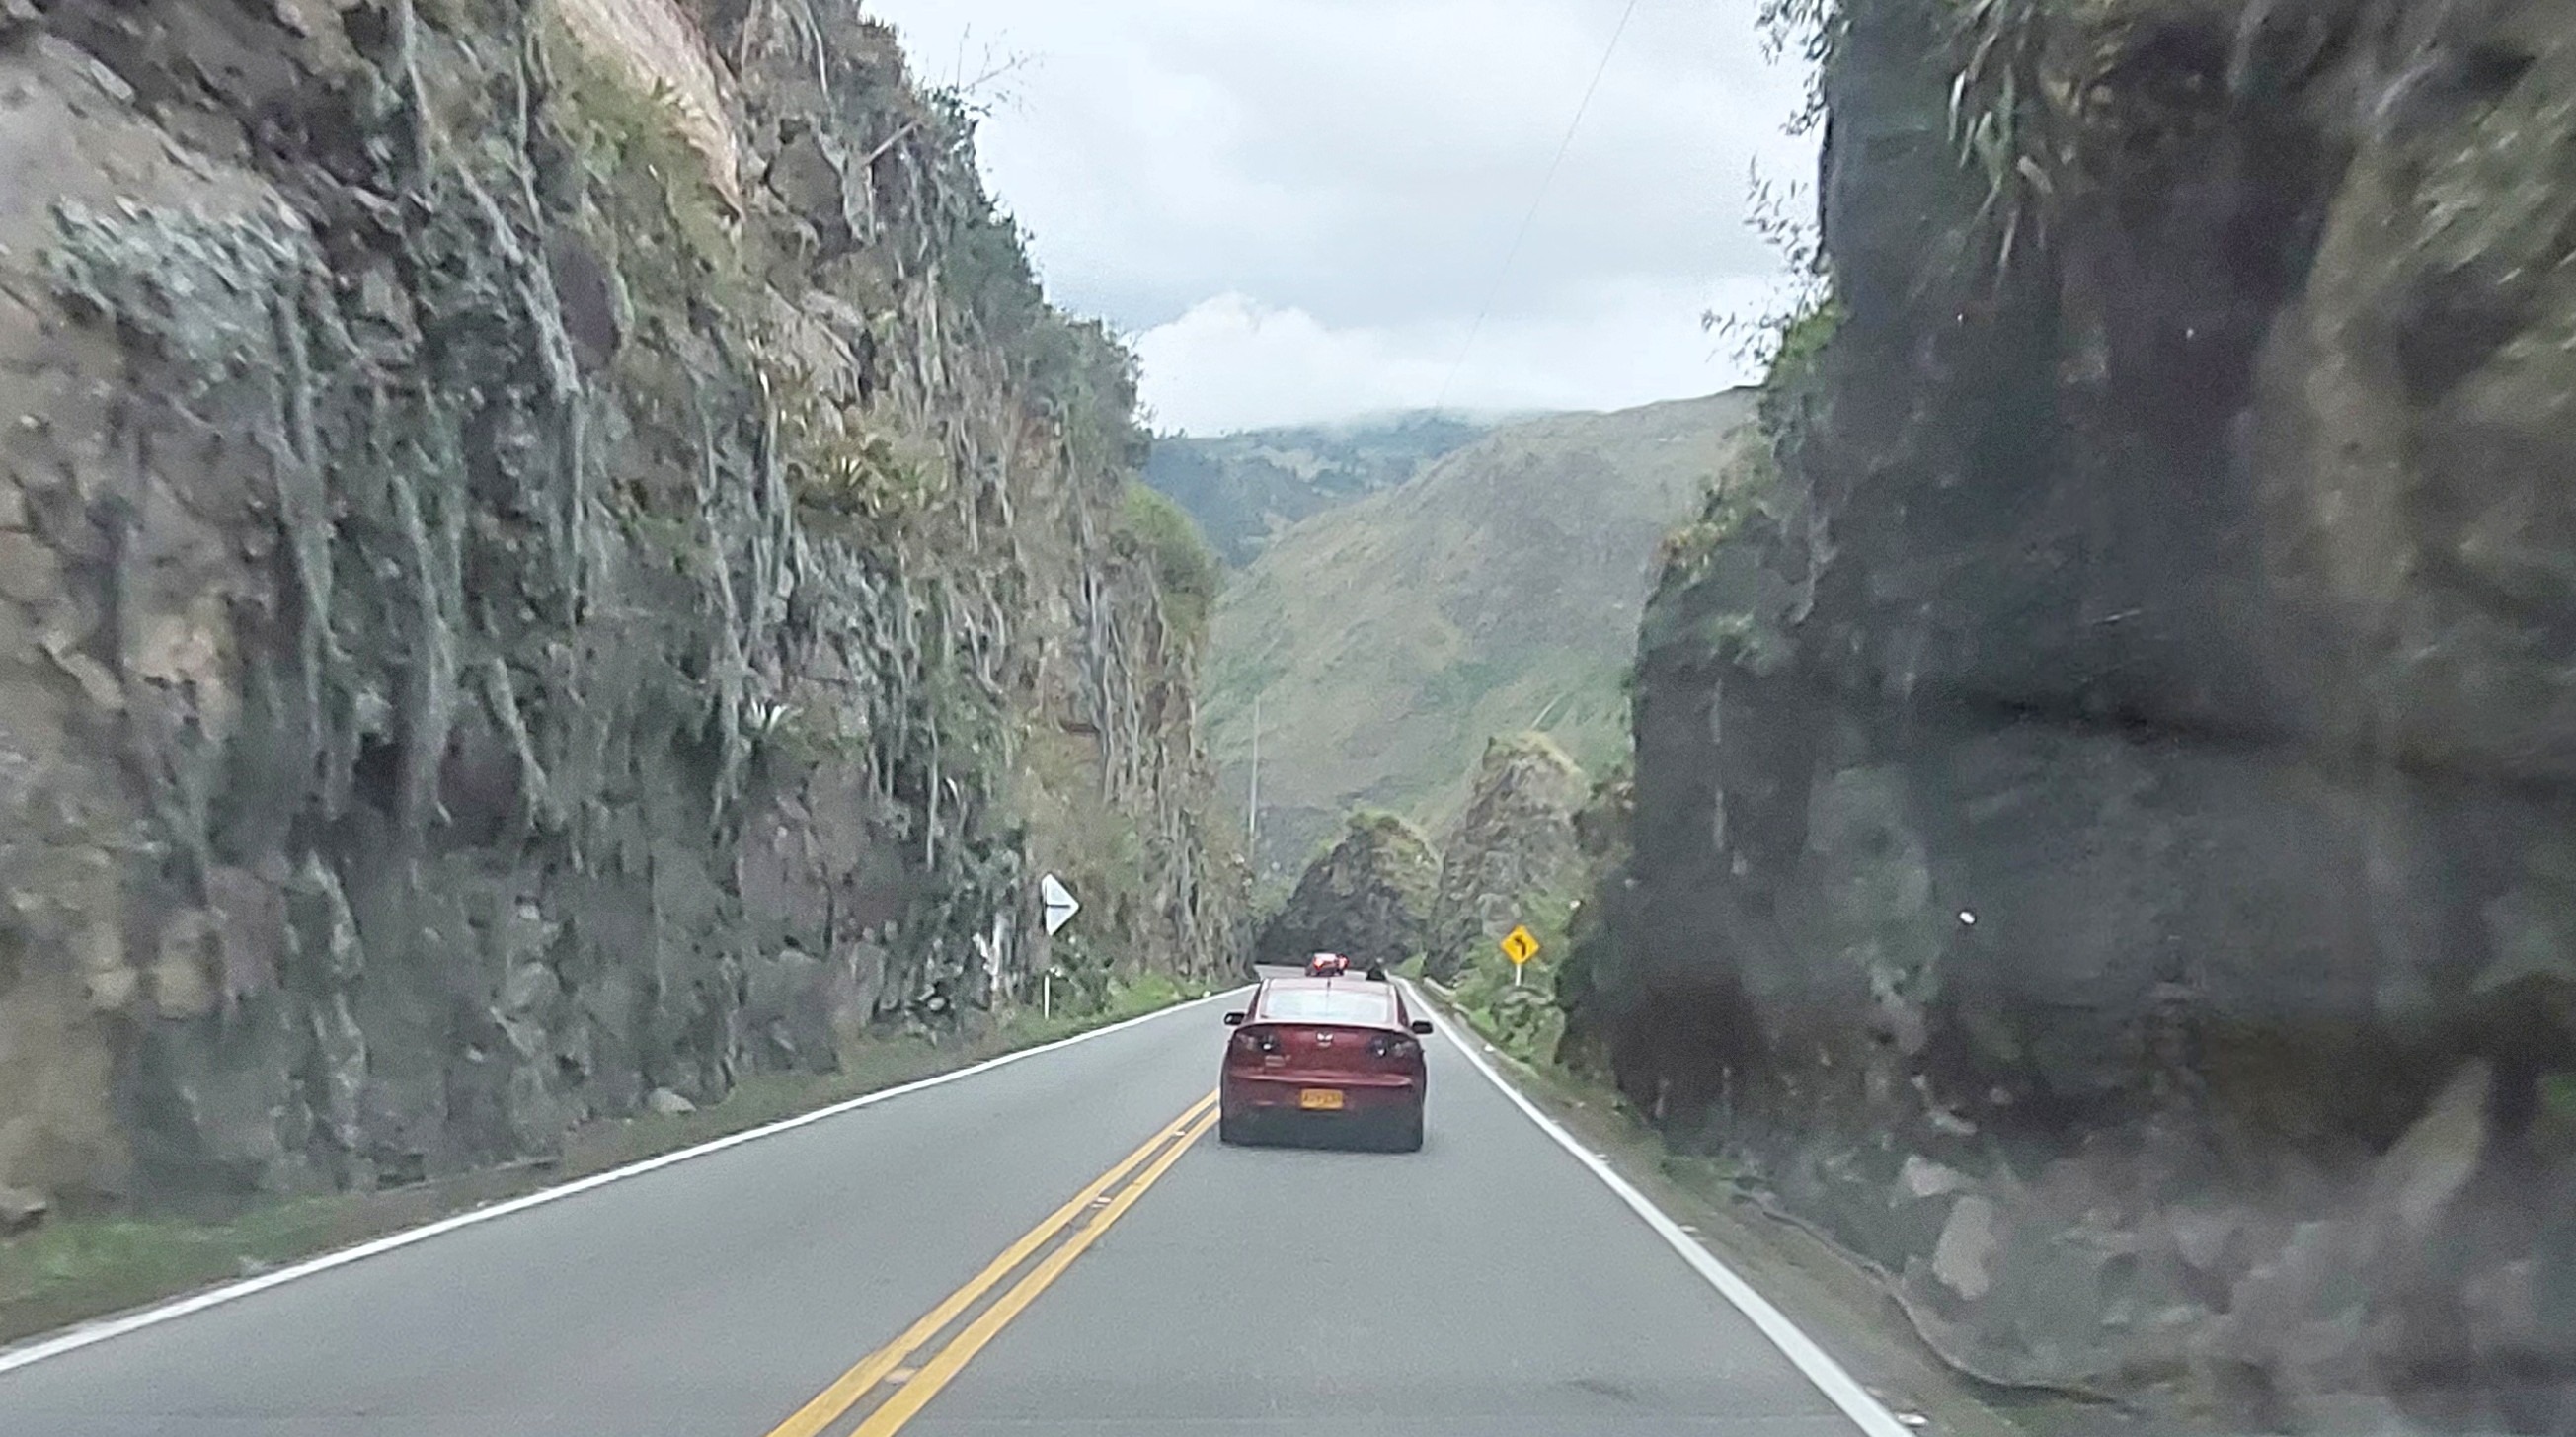 Ruta Pichincha - Pasto, carretera en en el descenso hacia el Pedregal